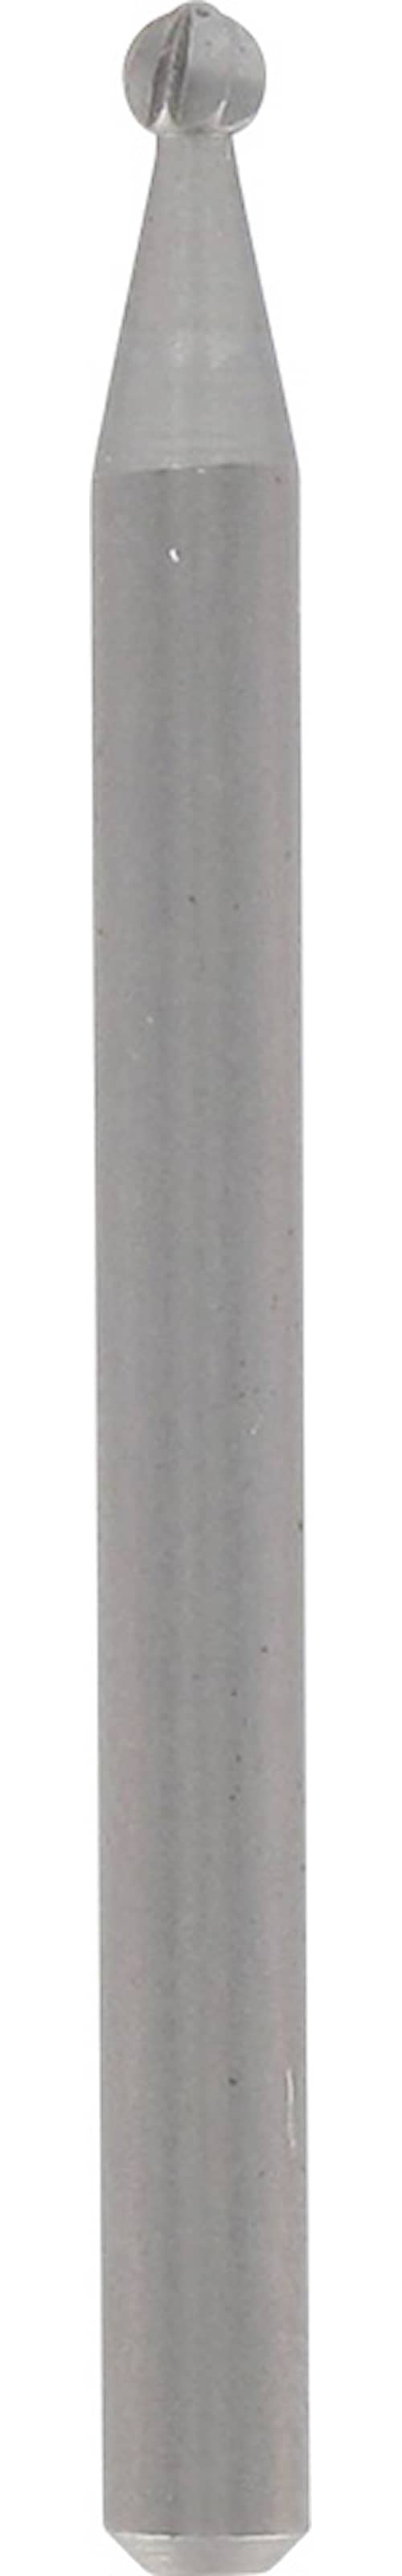 Dremel Gravyrfräs 107JA 2,4mm 3st